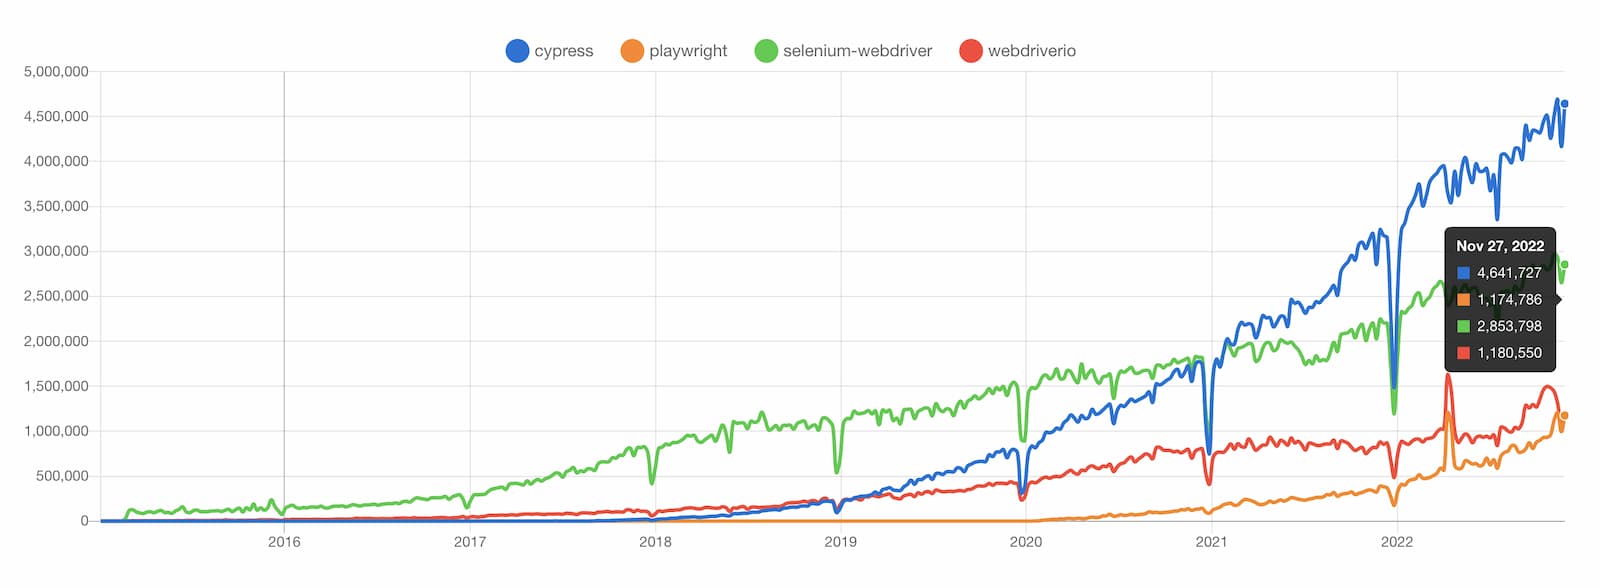 Cypress vs playwrite vs selenium vs webdriverio